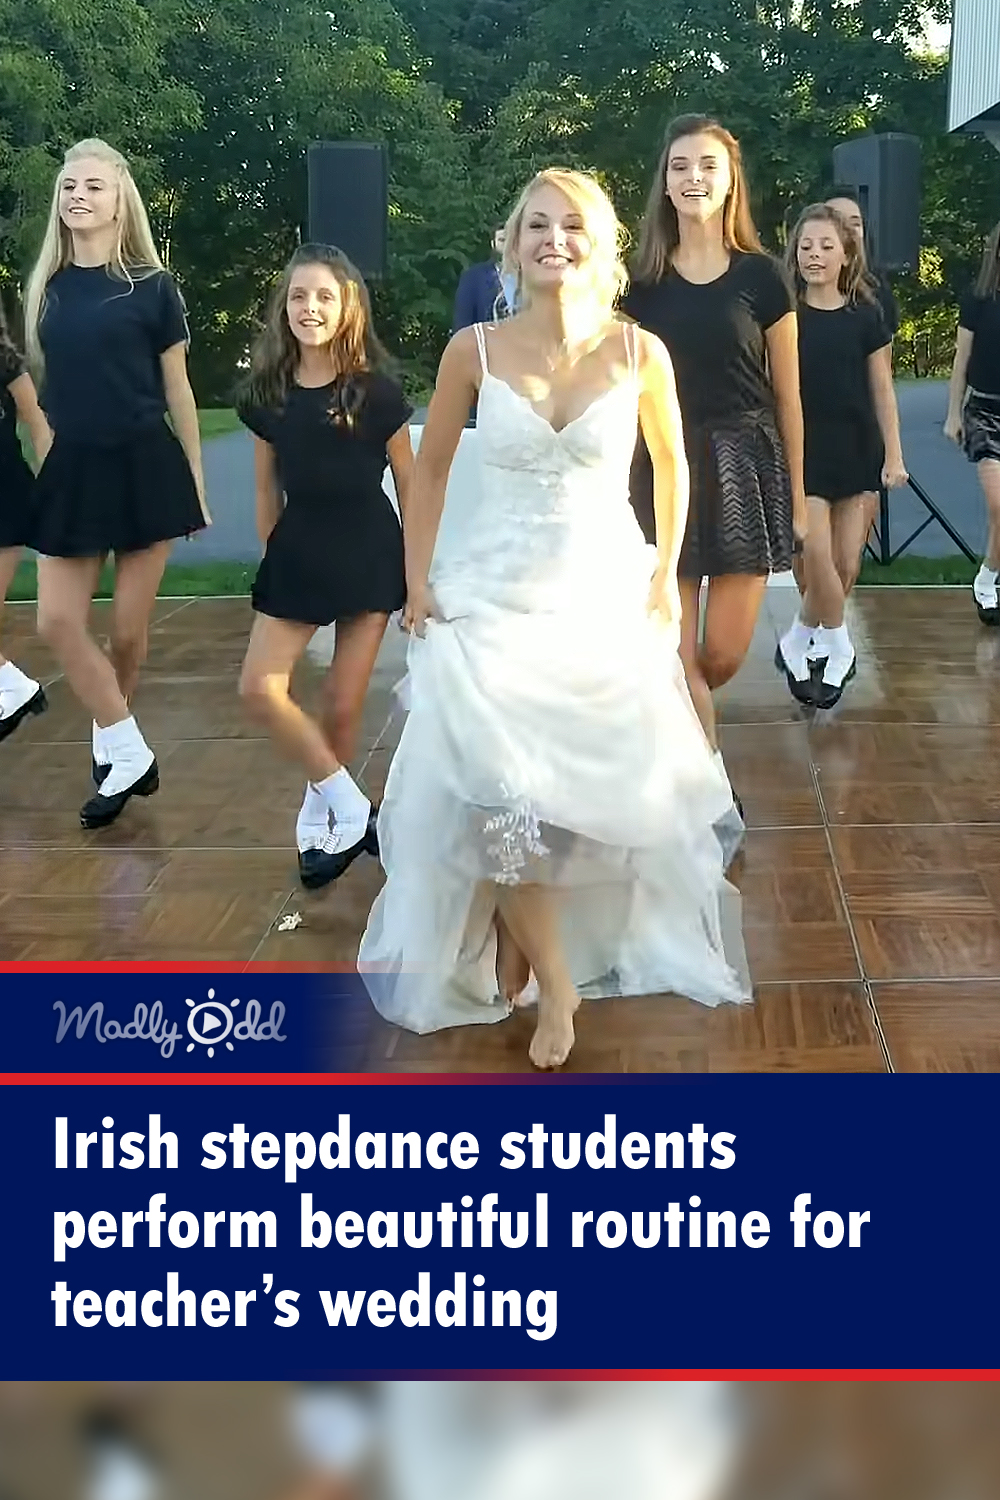 Irish stepdance students perform beautiful routine for teacher’s wedding